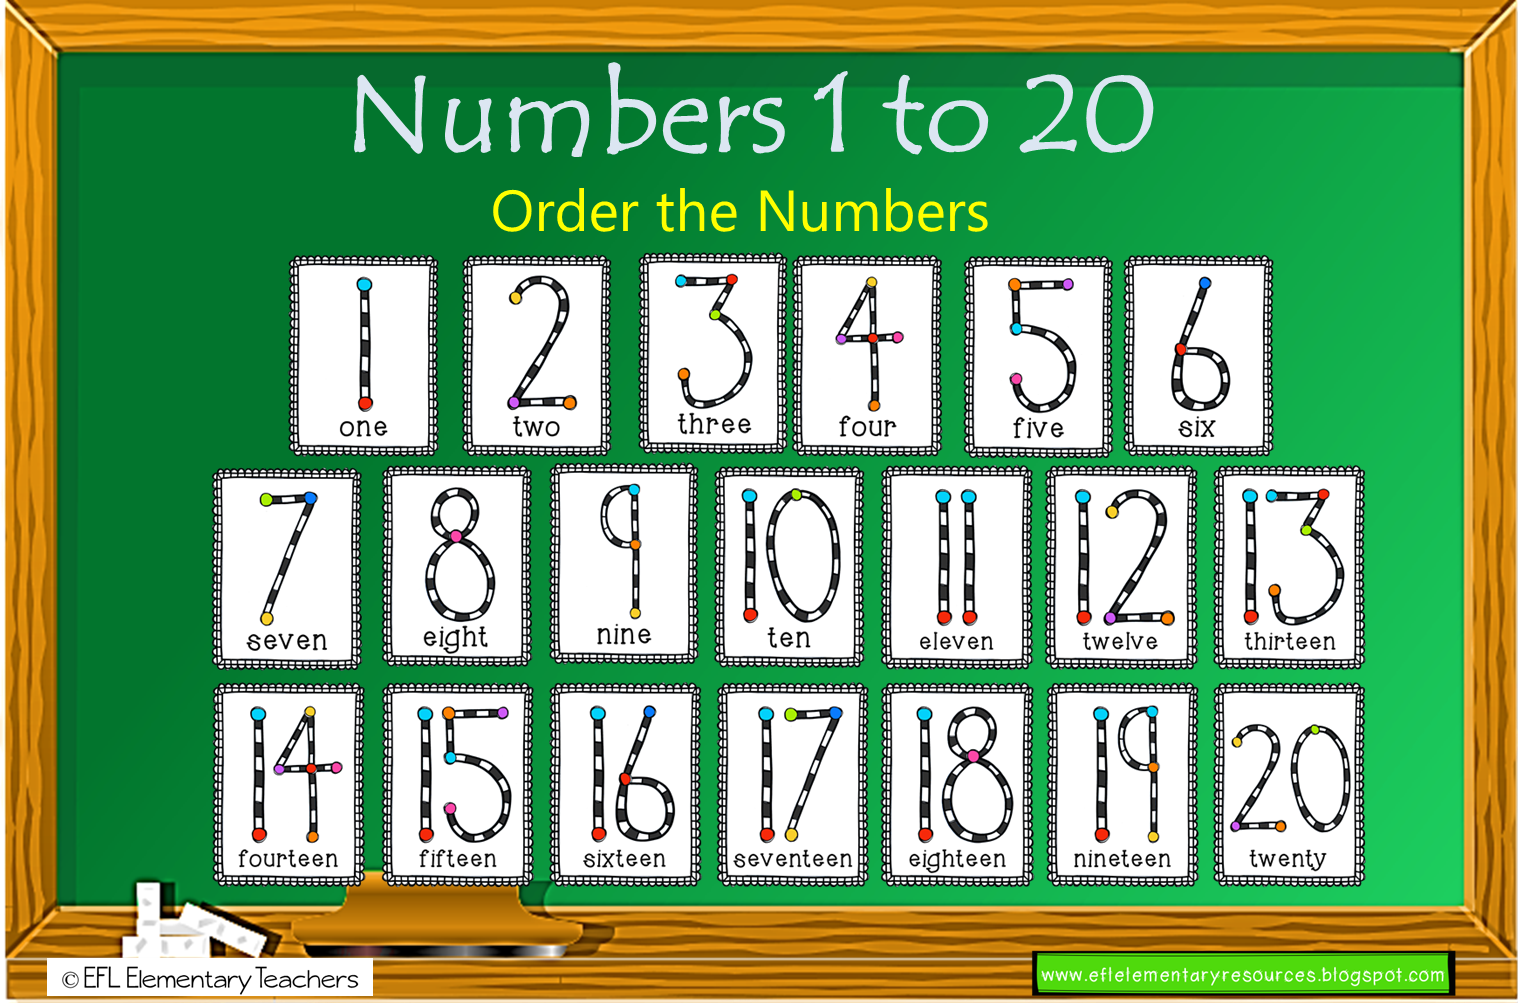 Efl Elementary Teachers Teaching Numbers 1 To 20 To Esl Ells Efl